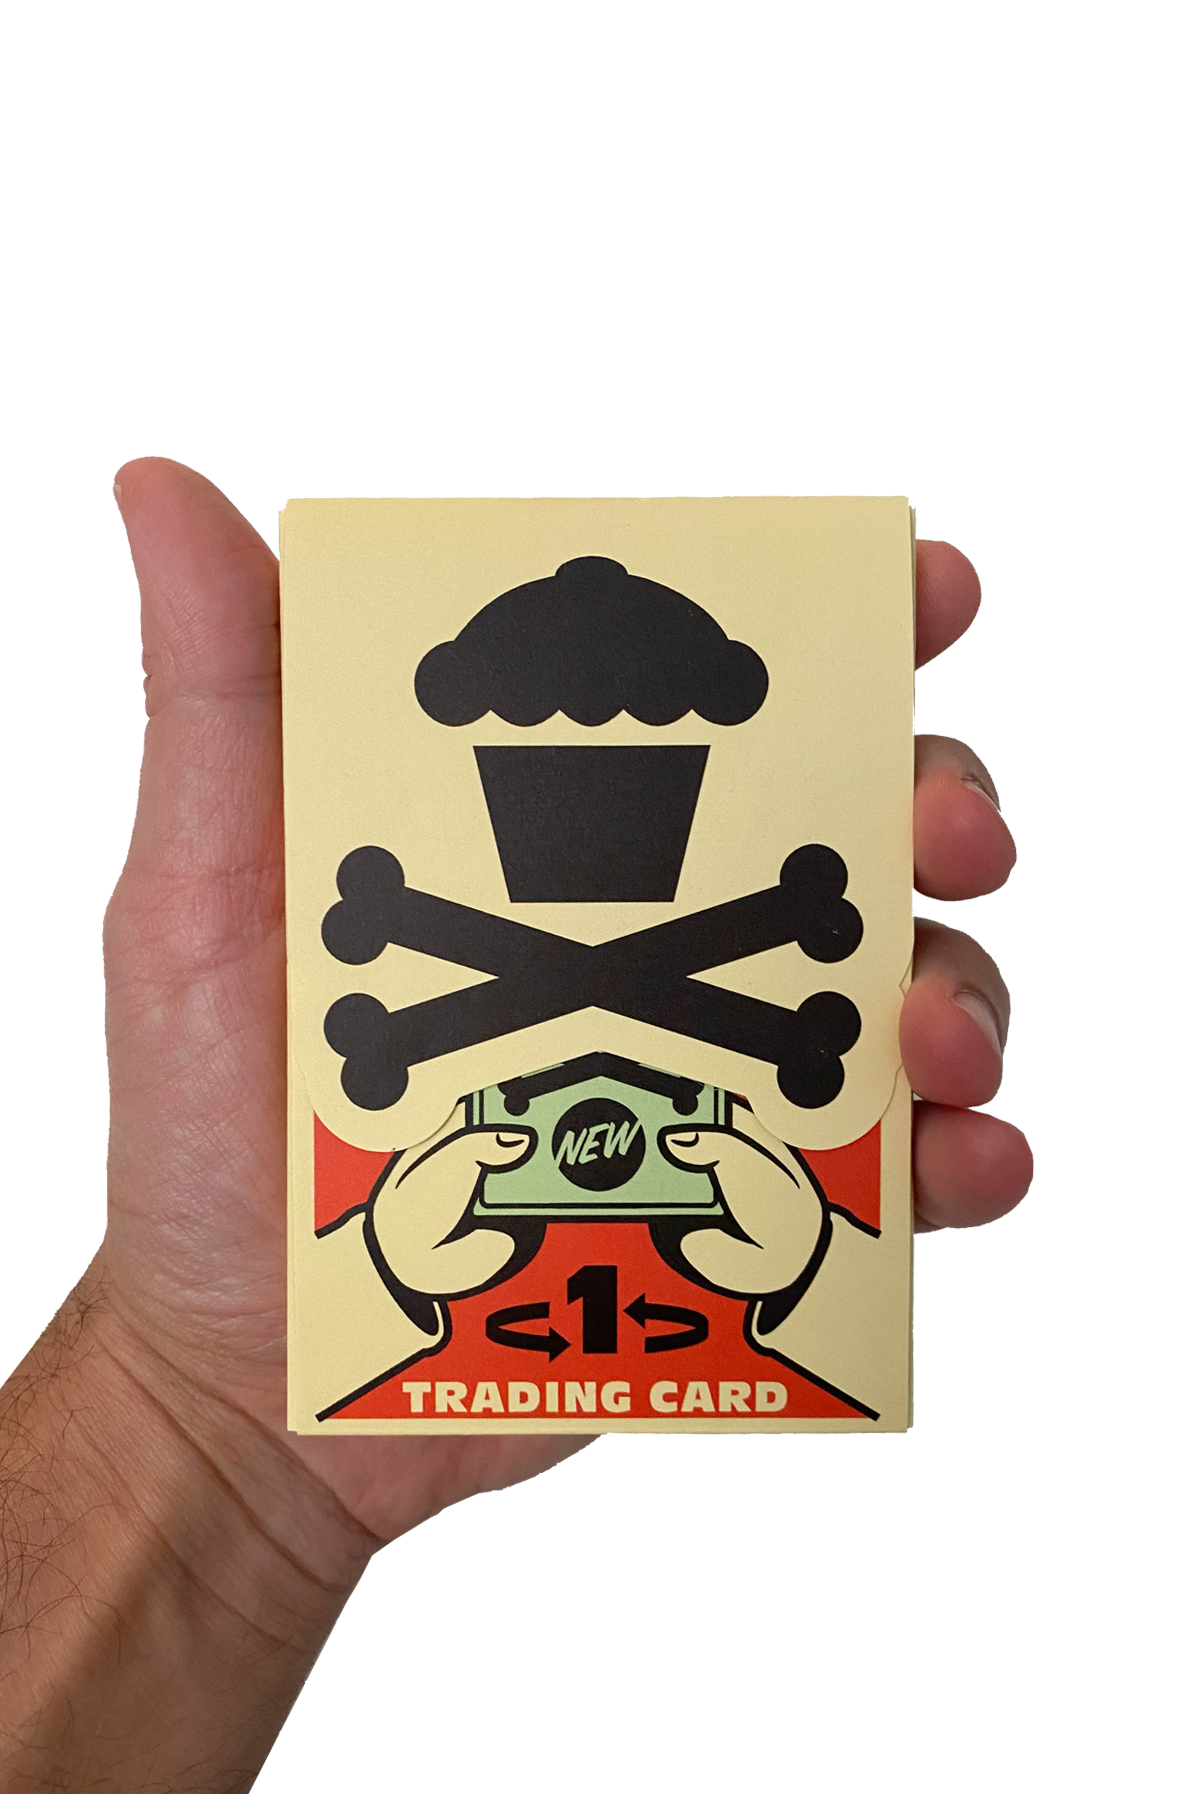 JC Trading Card (Batch 1) - 10 Pack